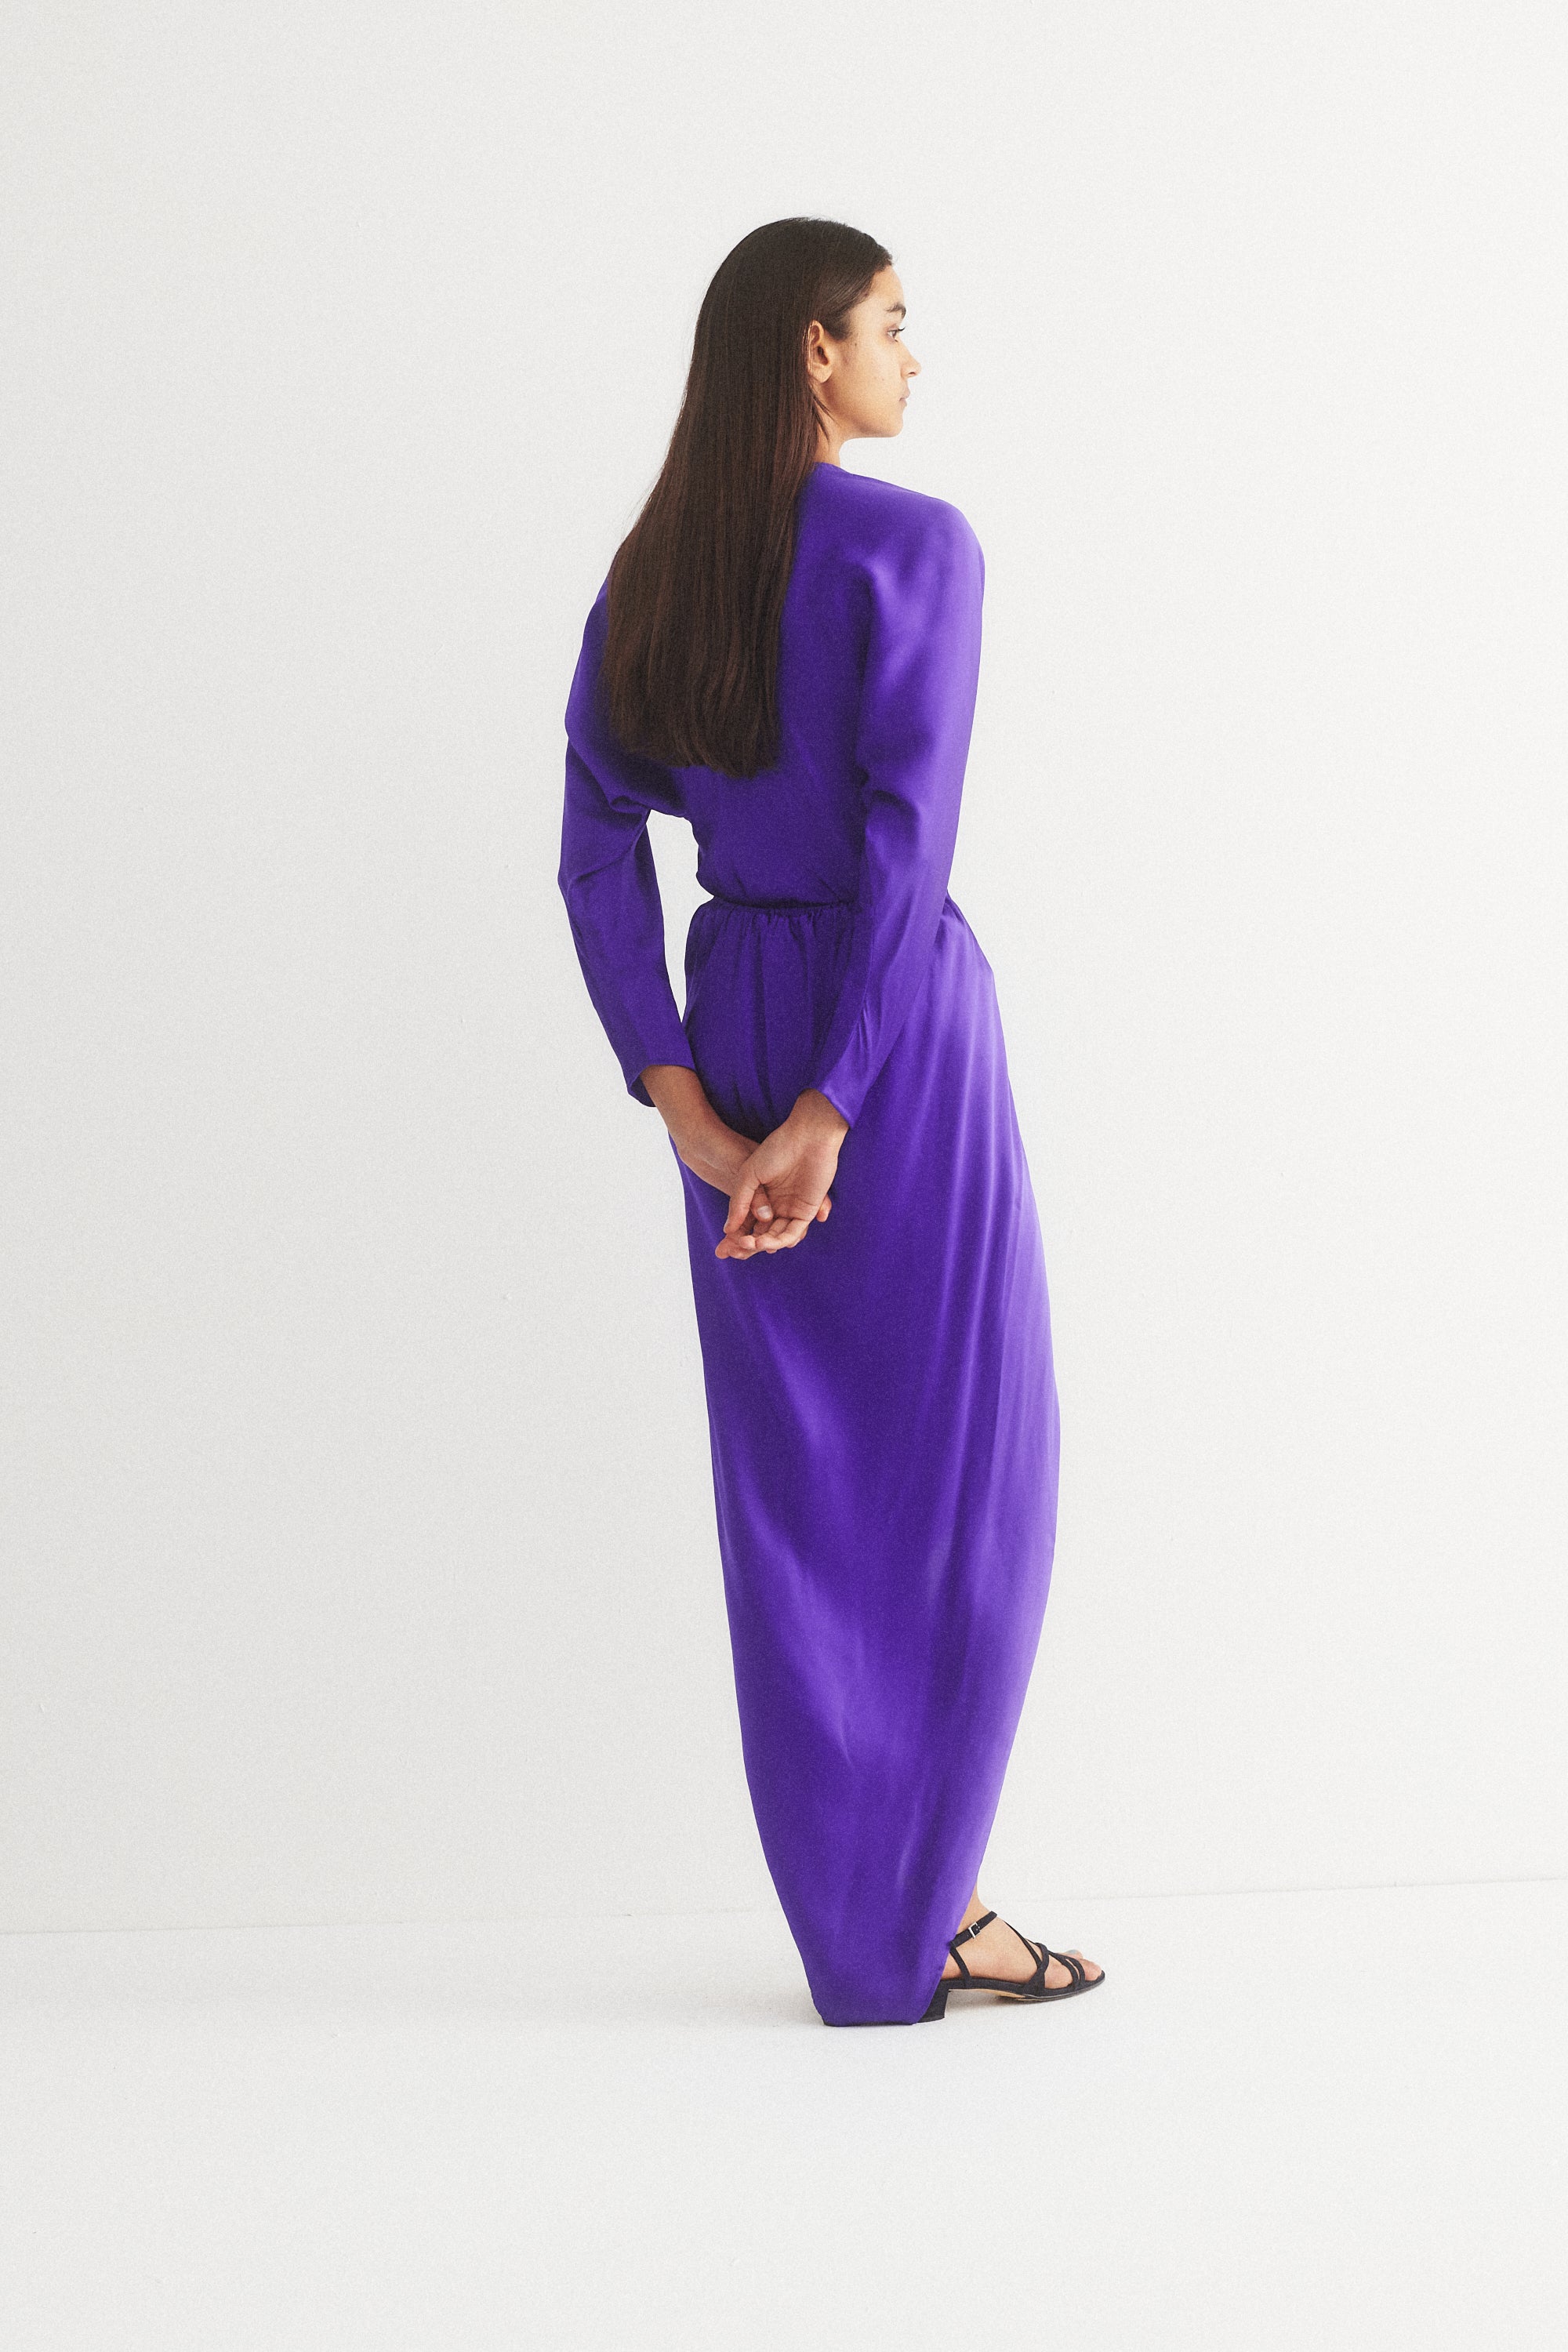 Halston Ultraviolet Silk Dress - Desert Vintage